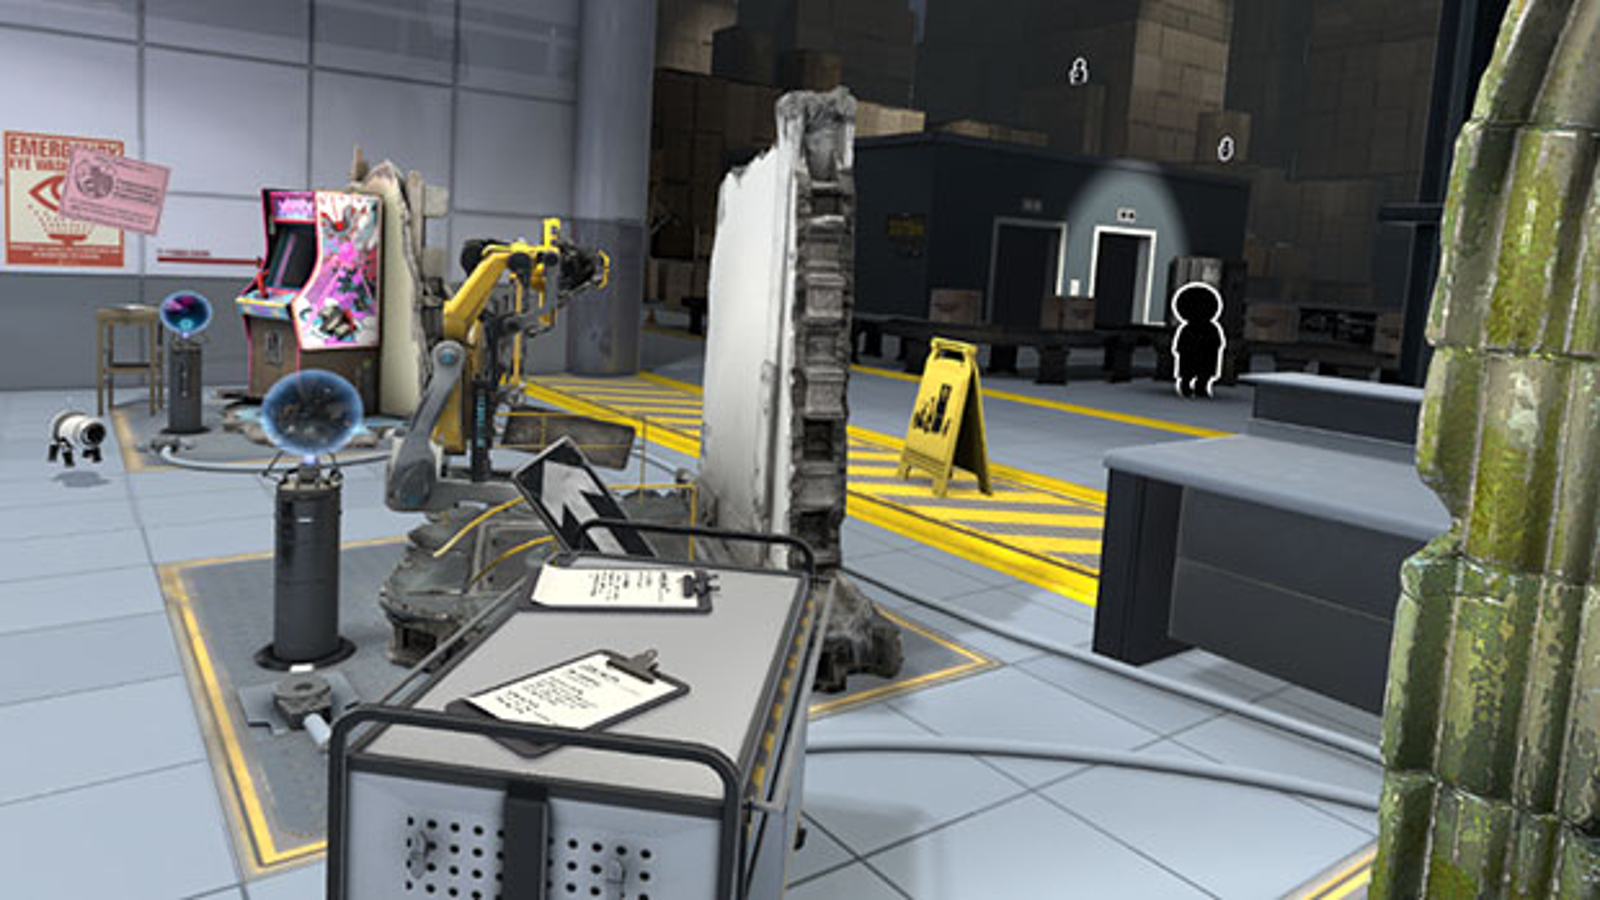 Darkroom vr. The Lab VR. The Lab игра. ВР игры Lab. The Lab Valve.